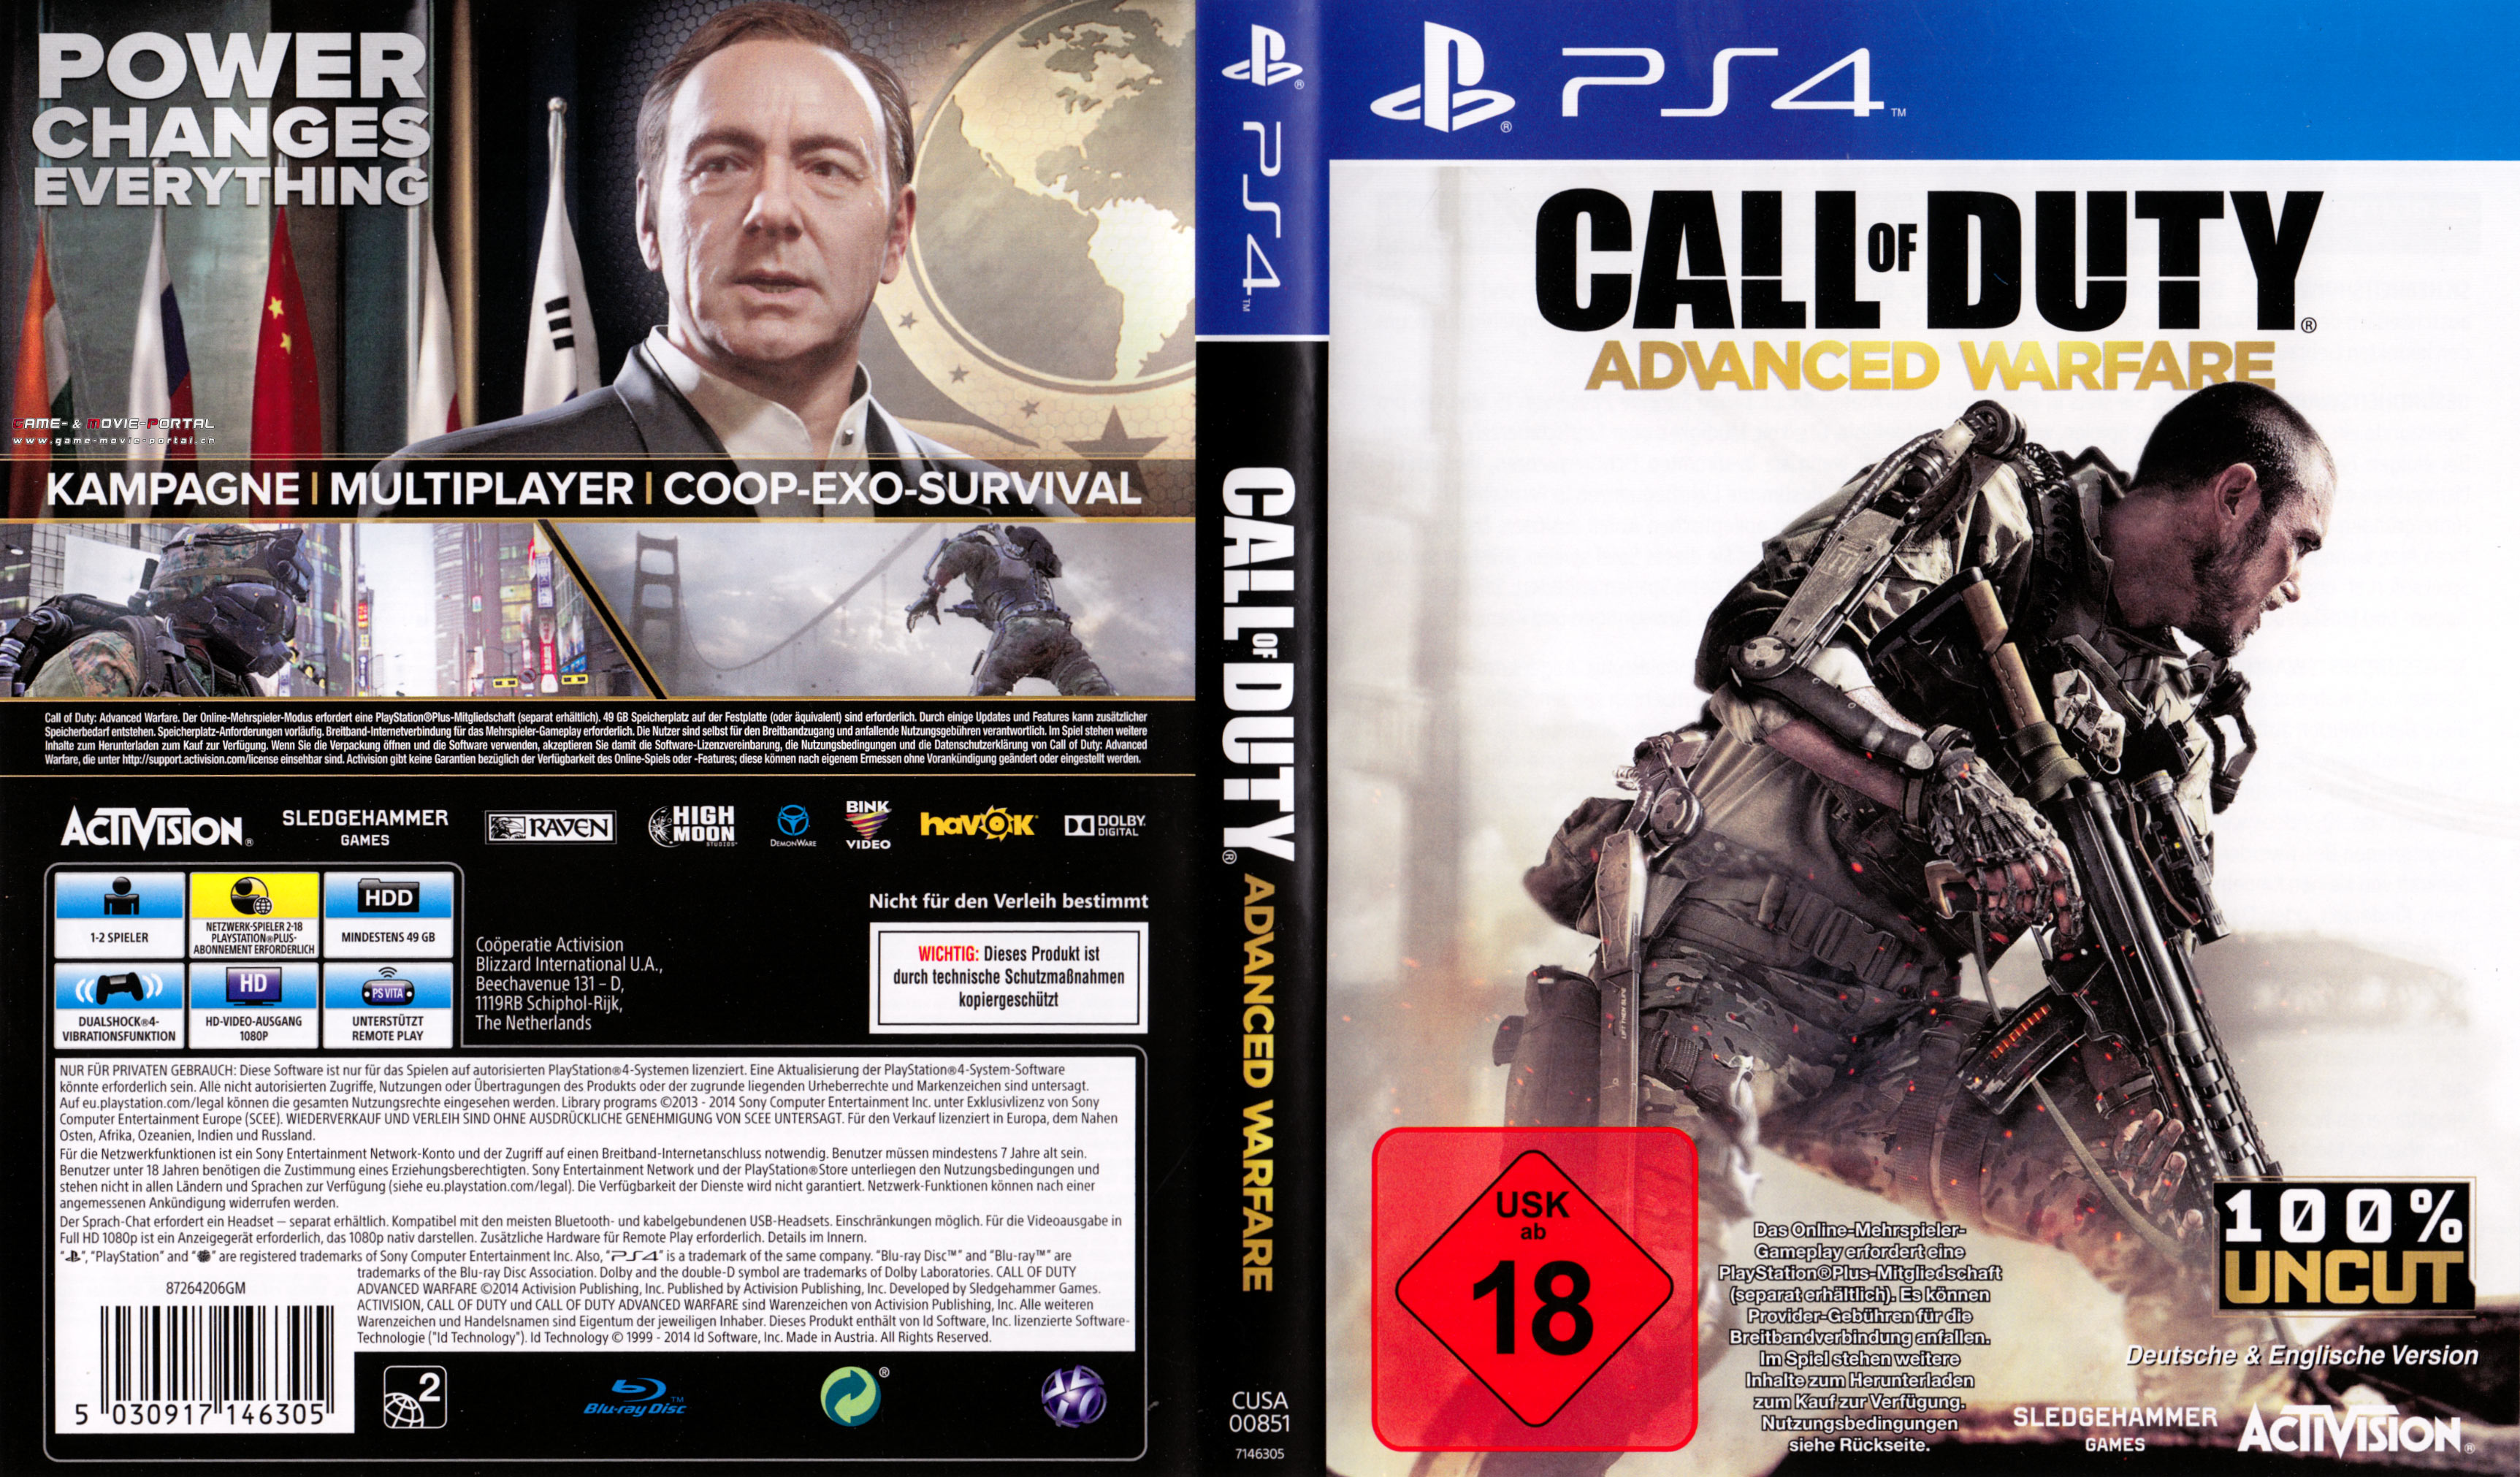 Call of duty modern warfare ps4 купить. Call of Duty Advanced Warfare ps4 диск. Call of Duty Advanced Warfare на ПС 4. Call of Duty Advanced Warfare ps4 обложка. Call of Duty Advanced Warfare ps3 обложка.